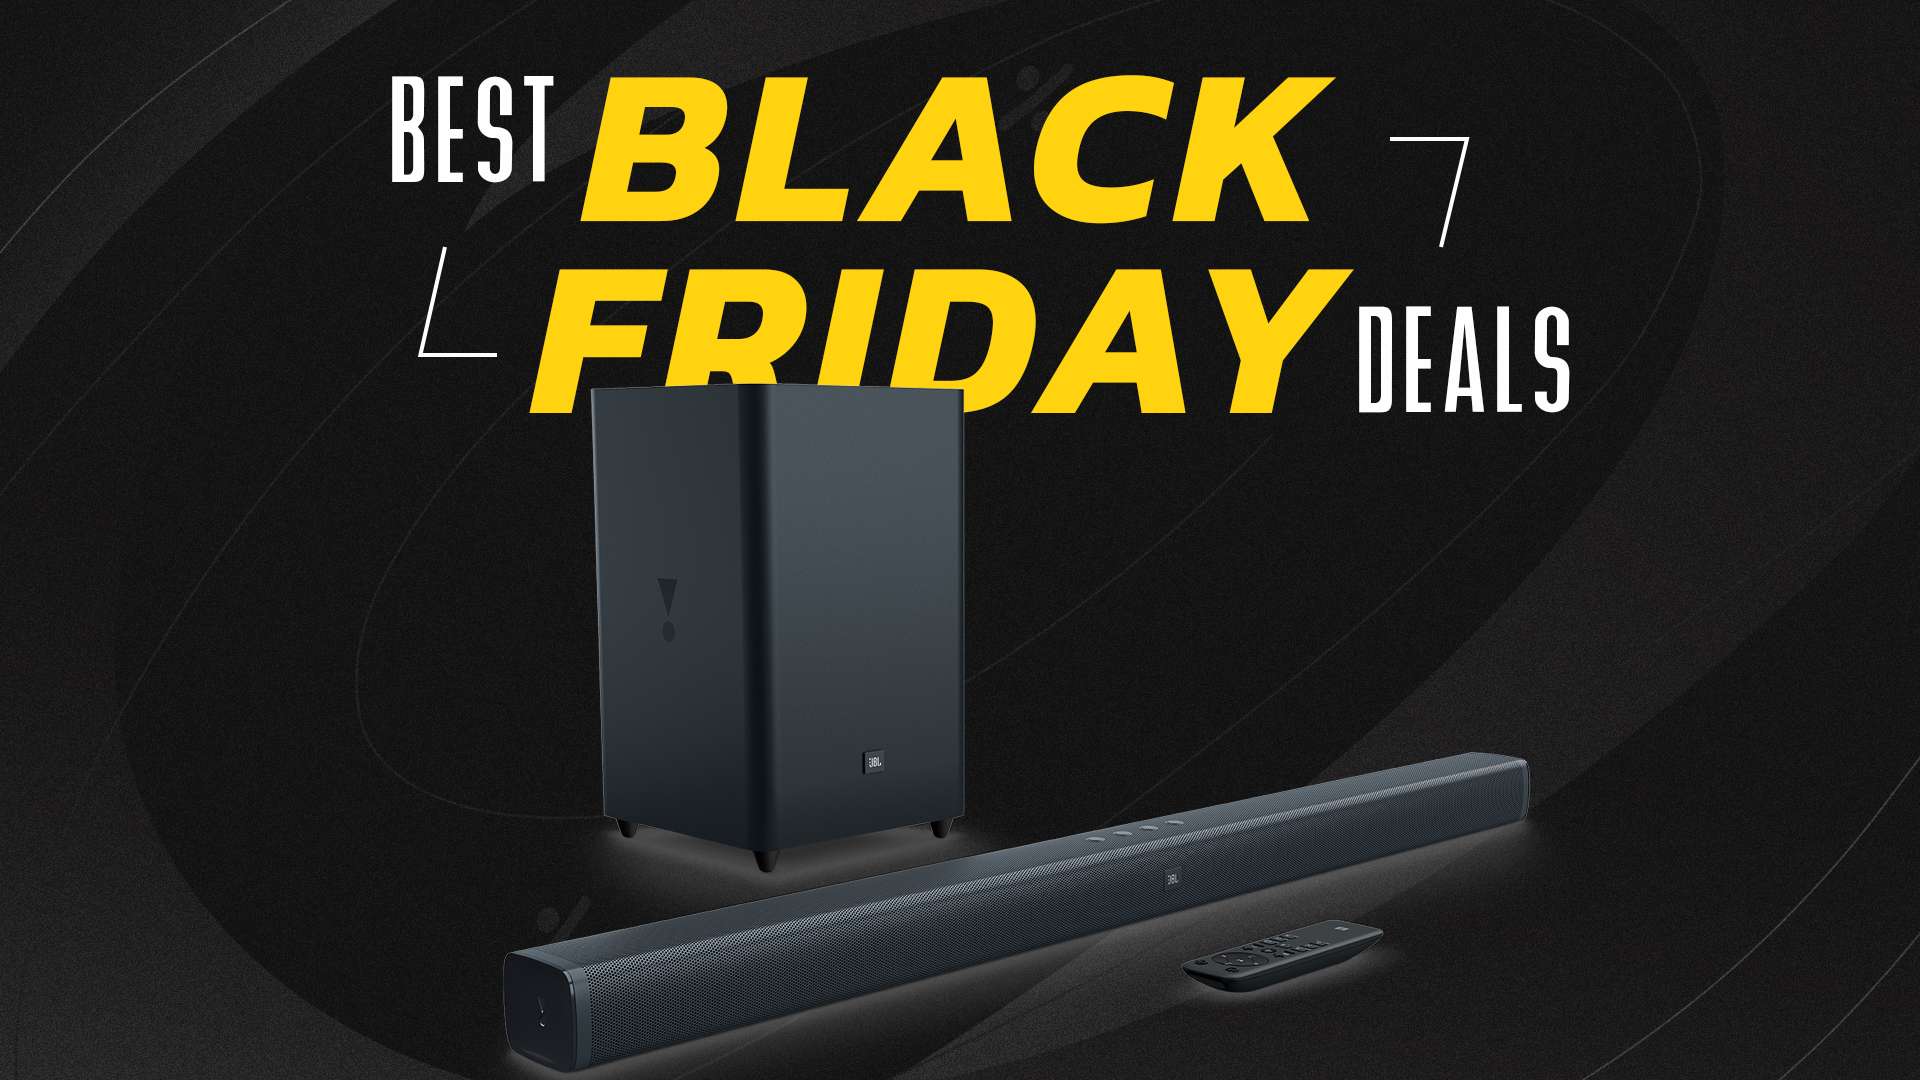 Best Buy Black Friday deals still live: Samsung, Bose, more